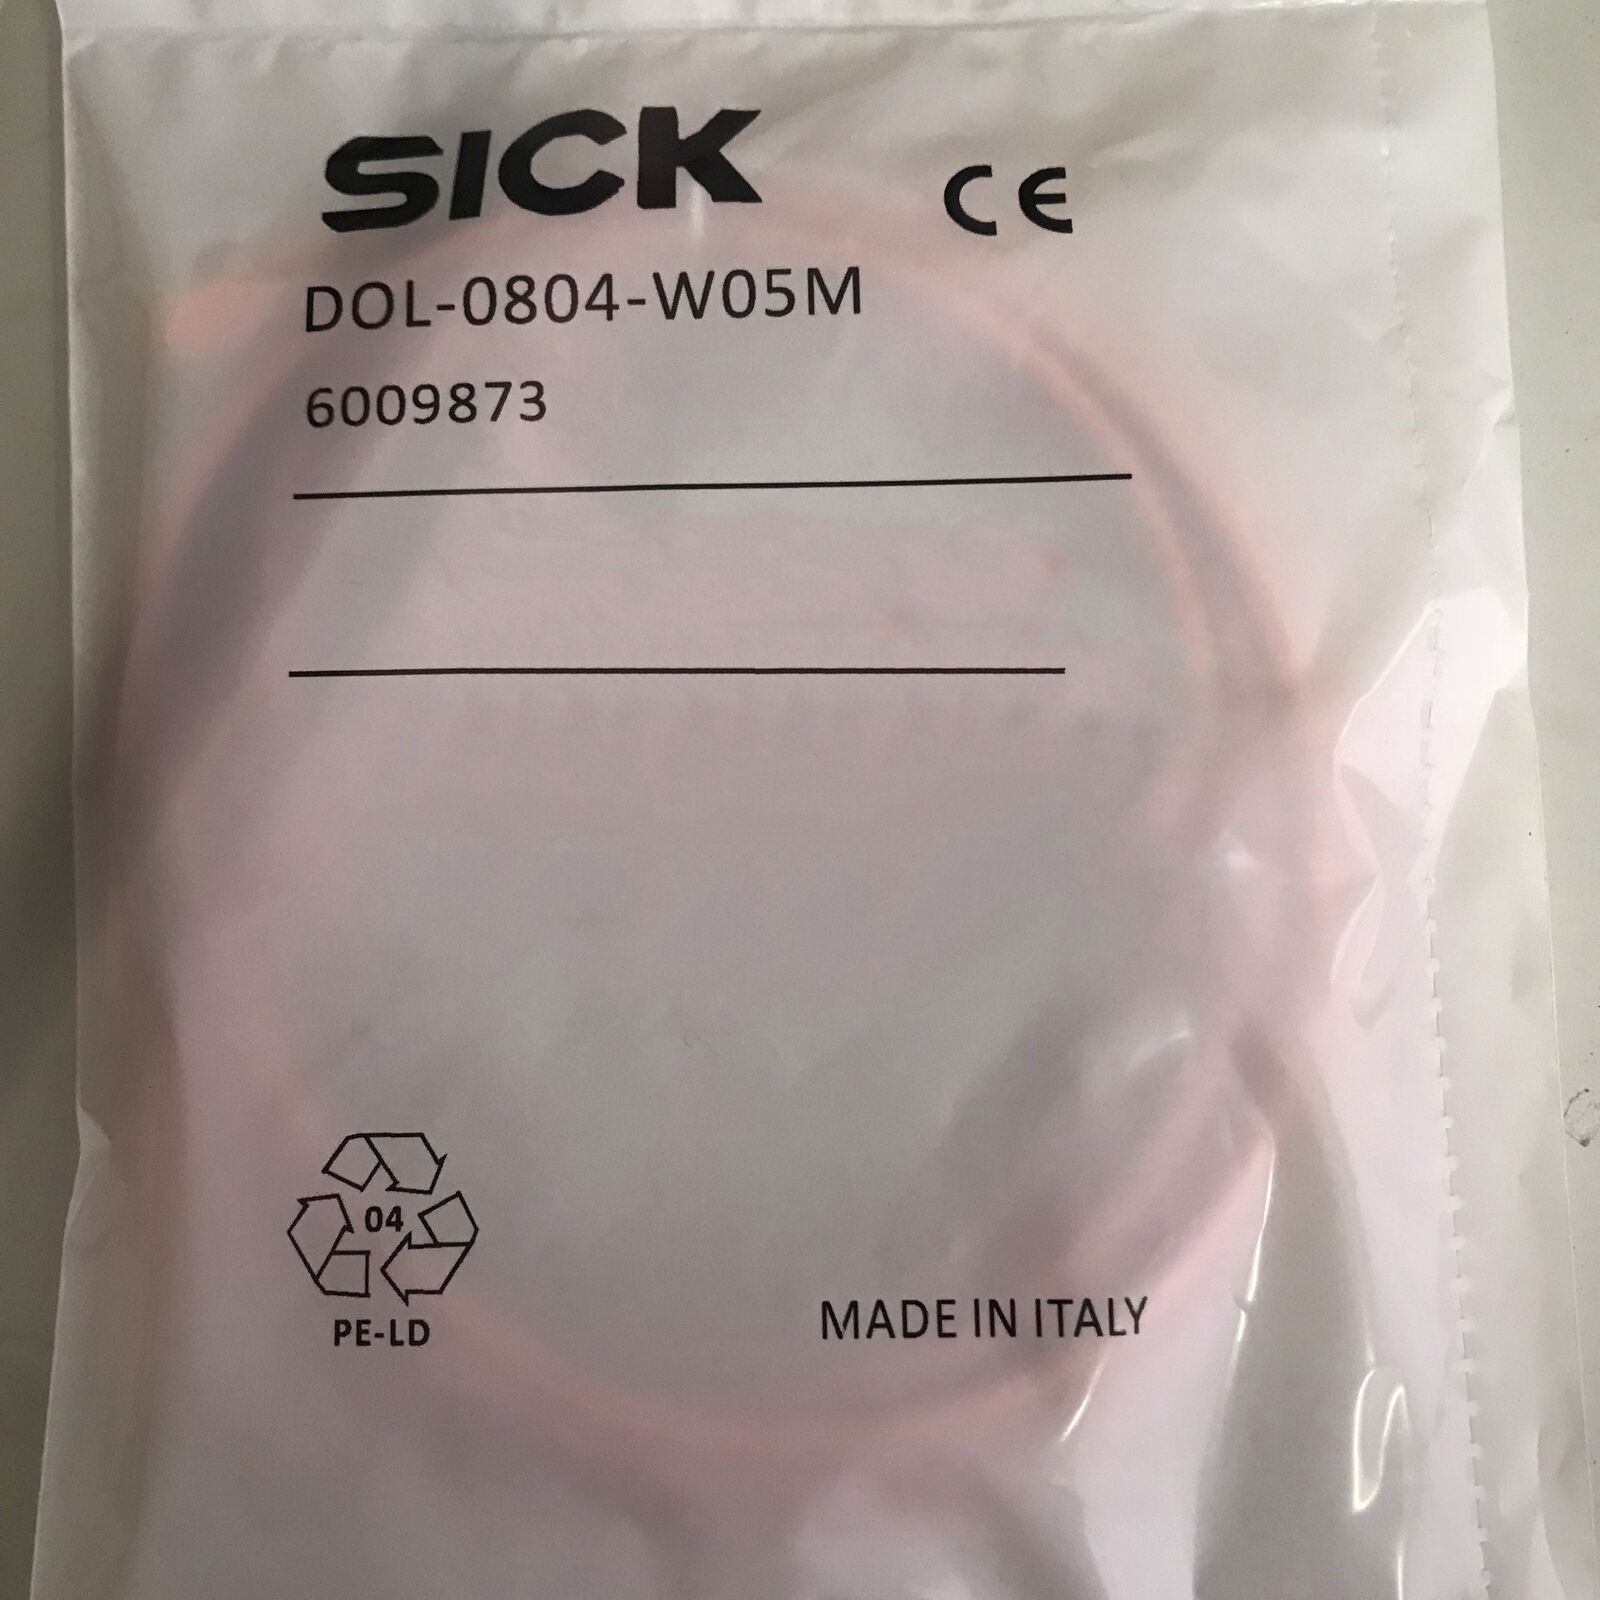 new  FOR SICK 6009873 DOL-0804-W05M Sensor cable spot stocks